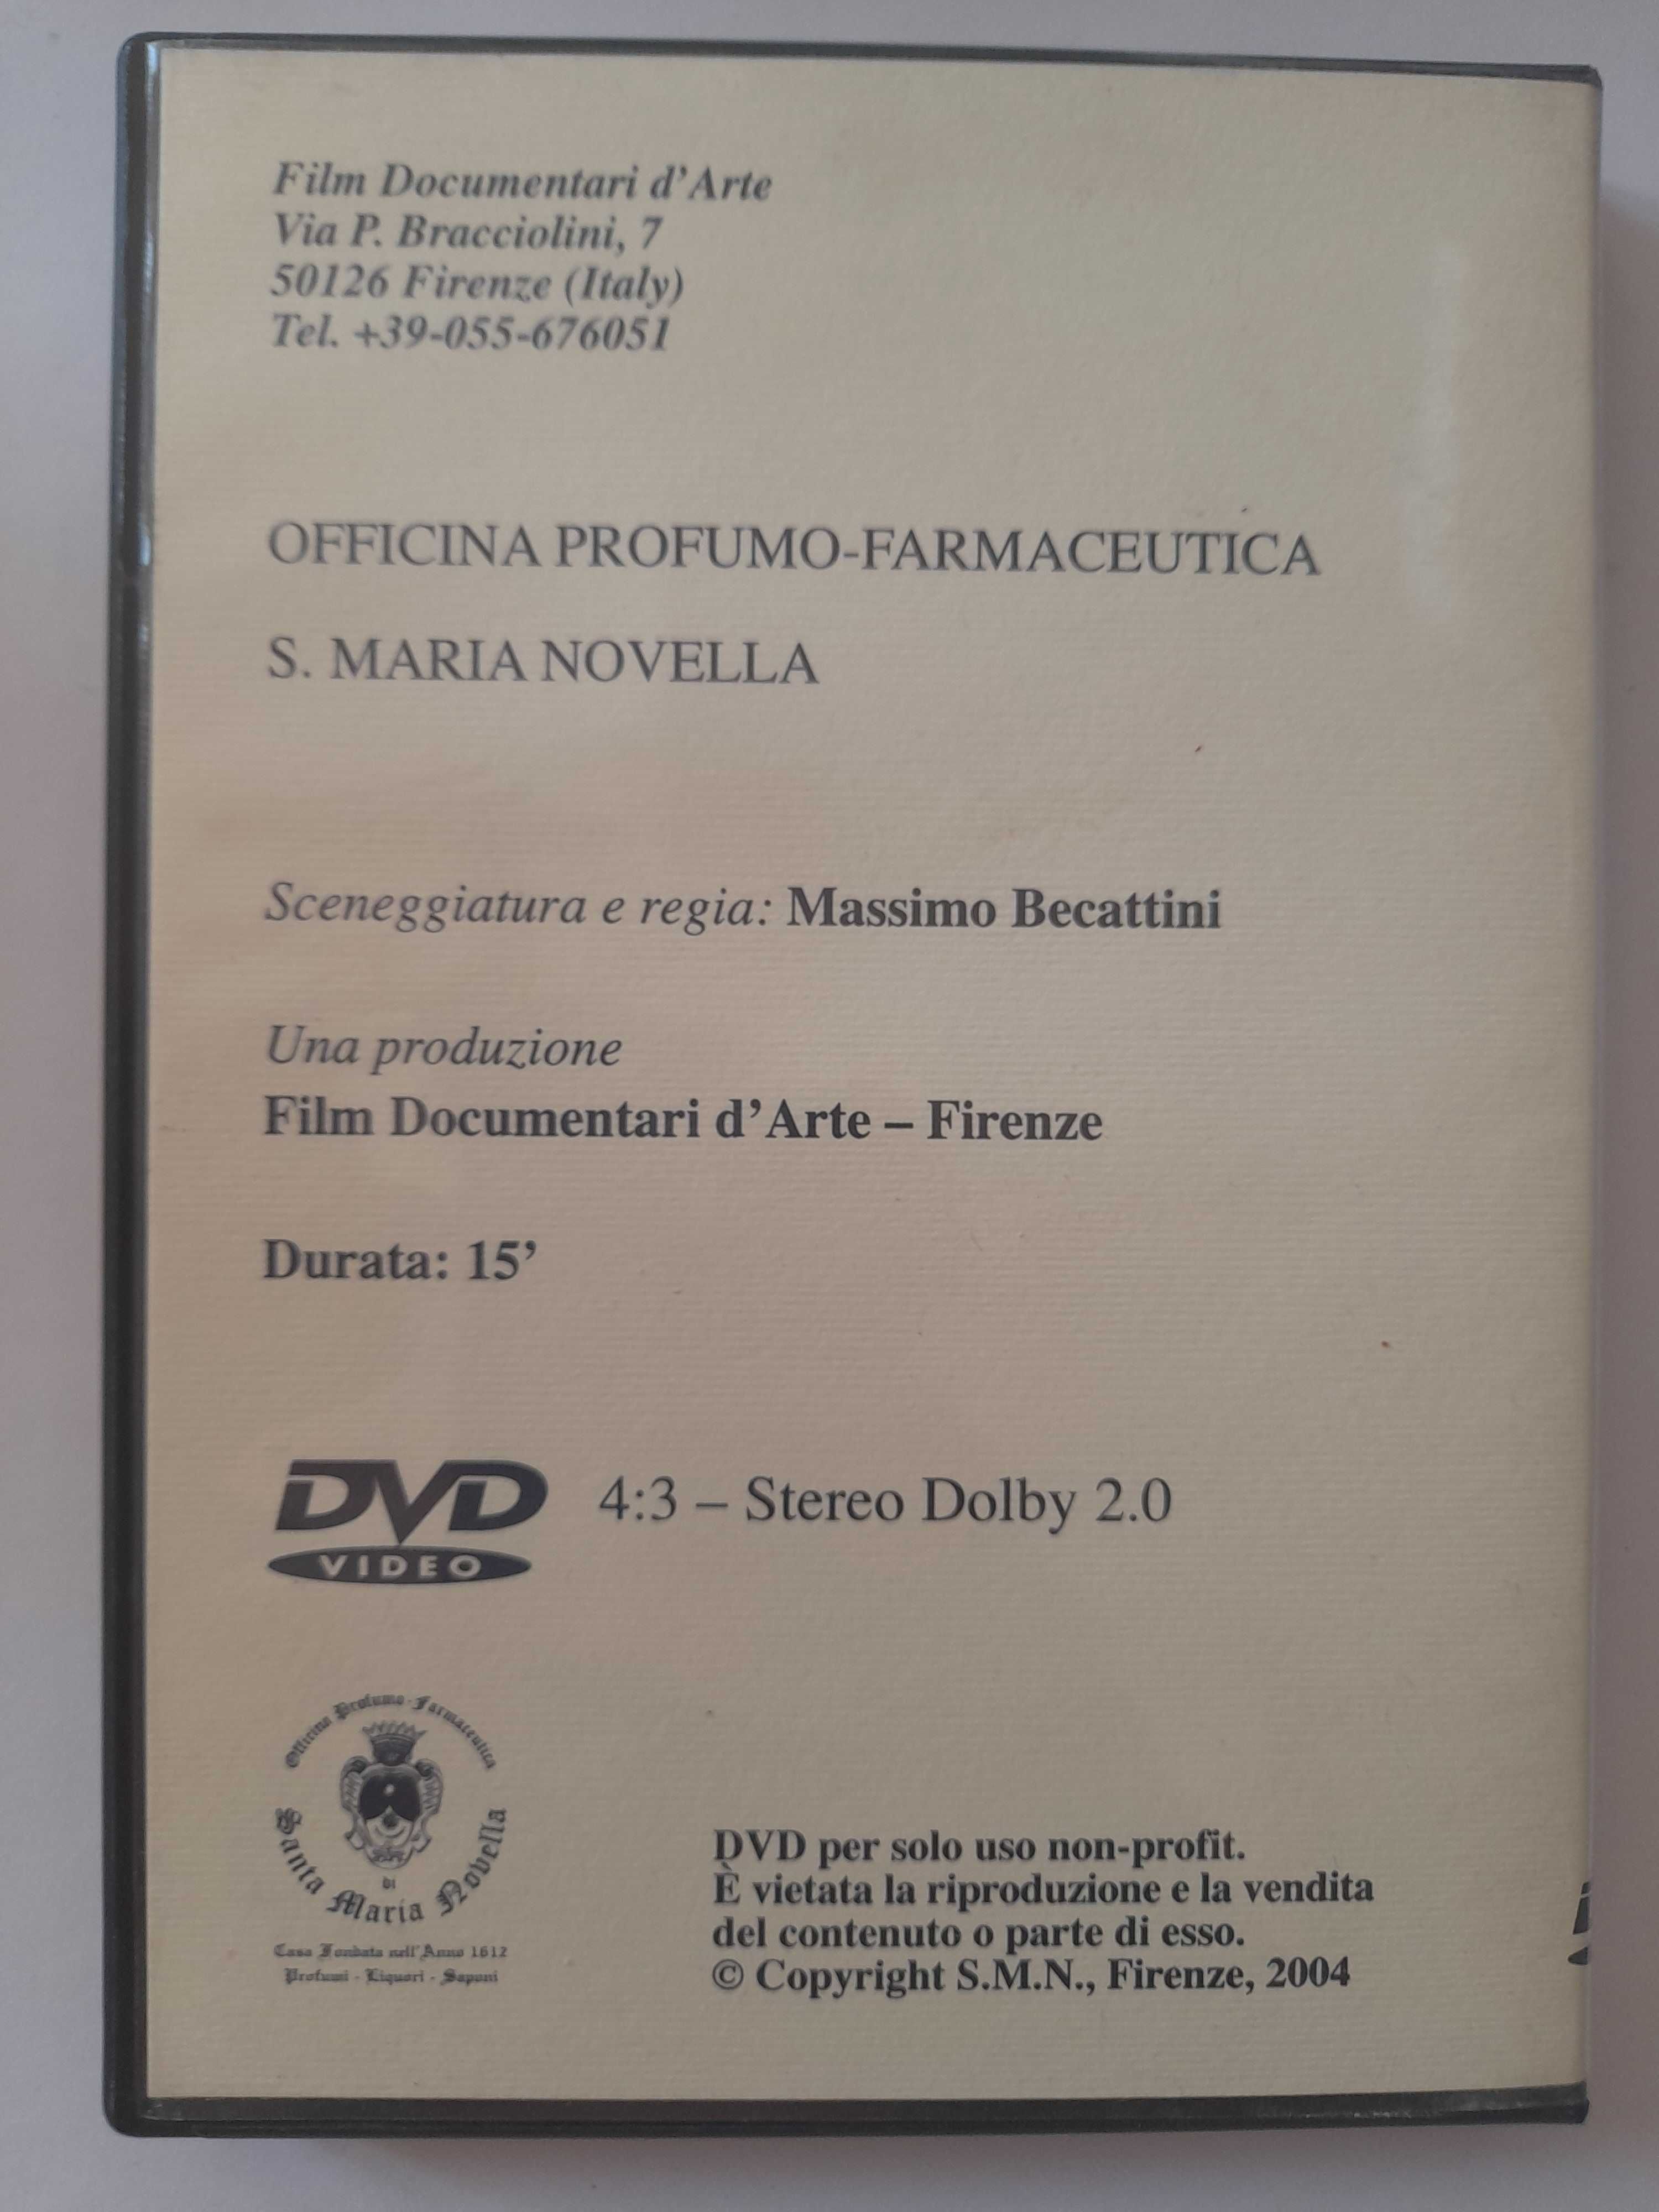 Officina Profumo-Farmaceutica S. Maria Novella DVD